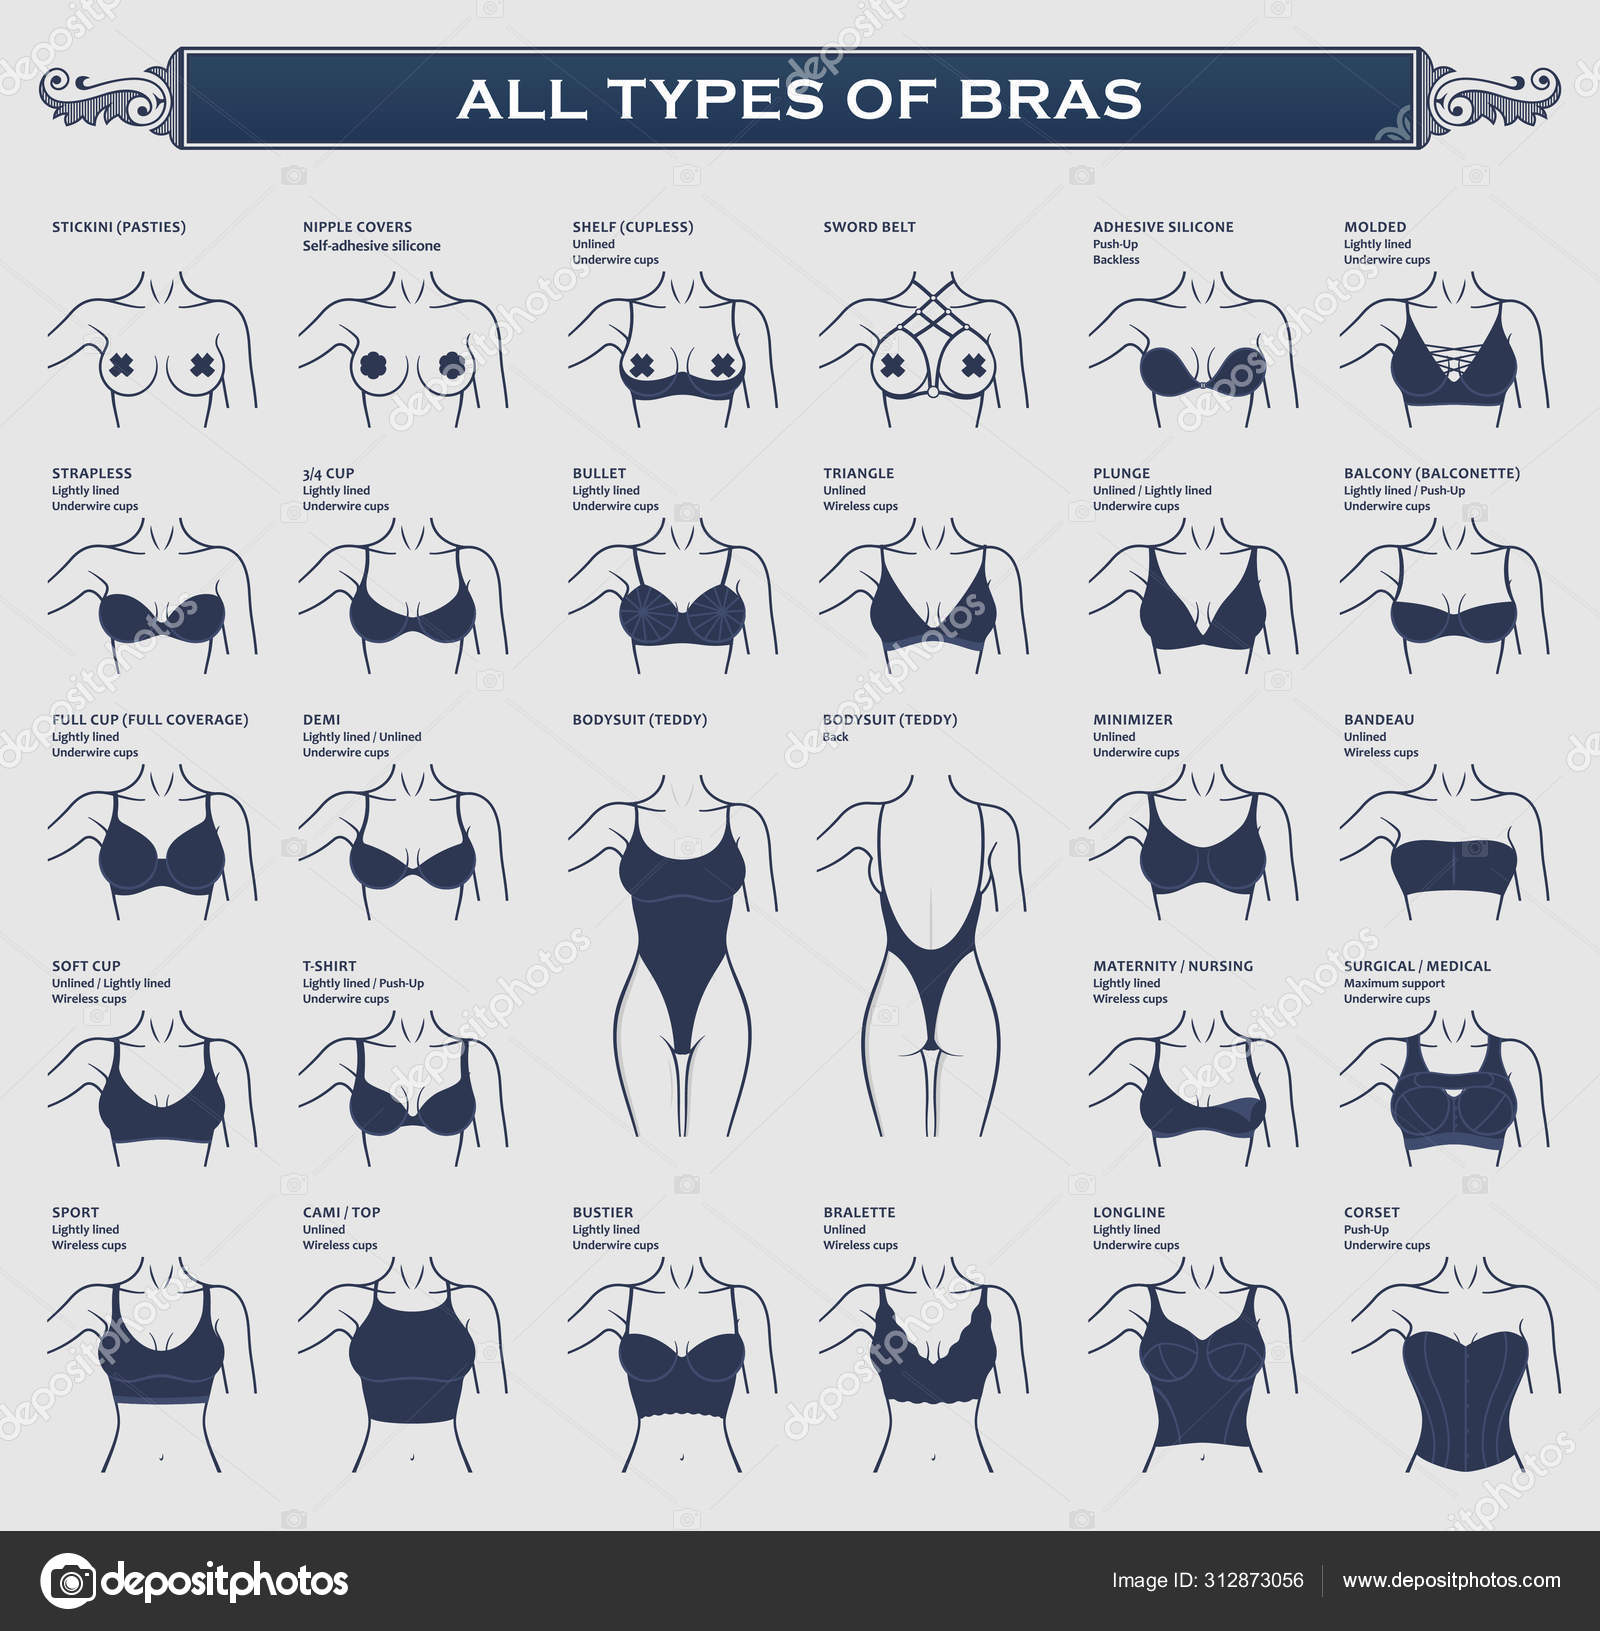 https://st4.depositphotos.com/1000804/31287/v/1600/depositphotos_312873056-stock-illustration-types-of-bras-the-most.jpg